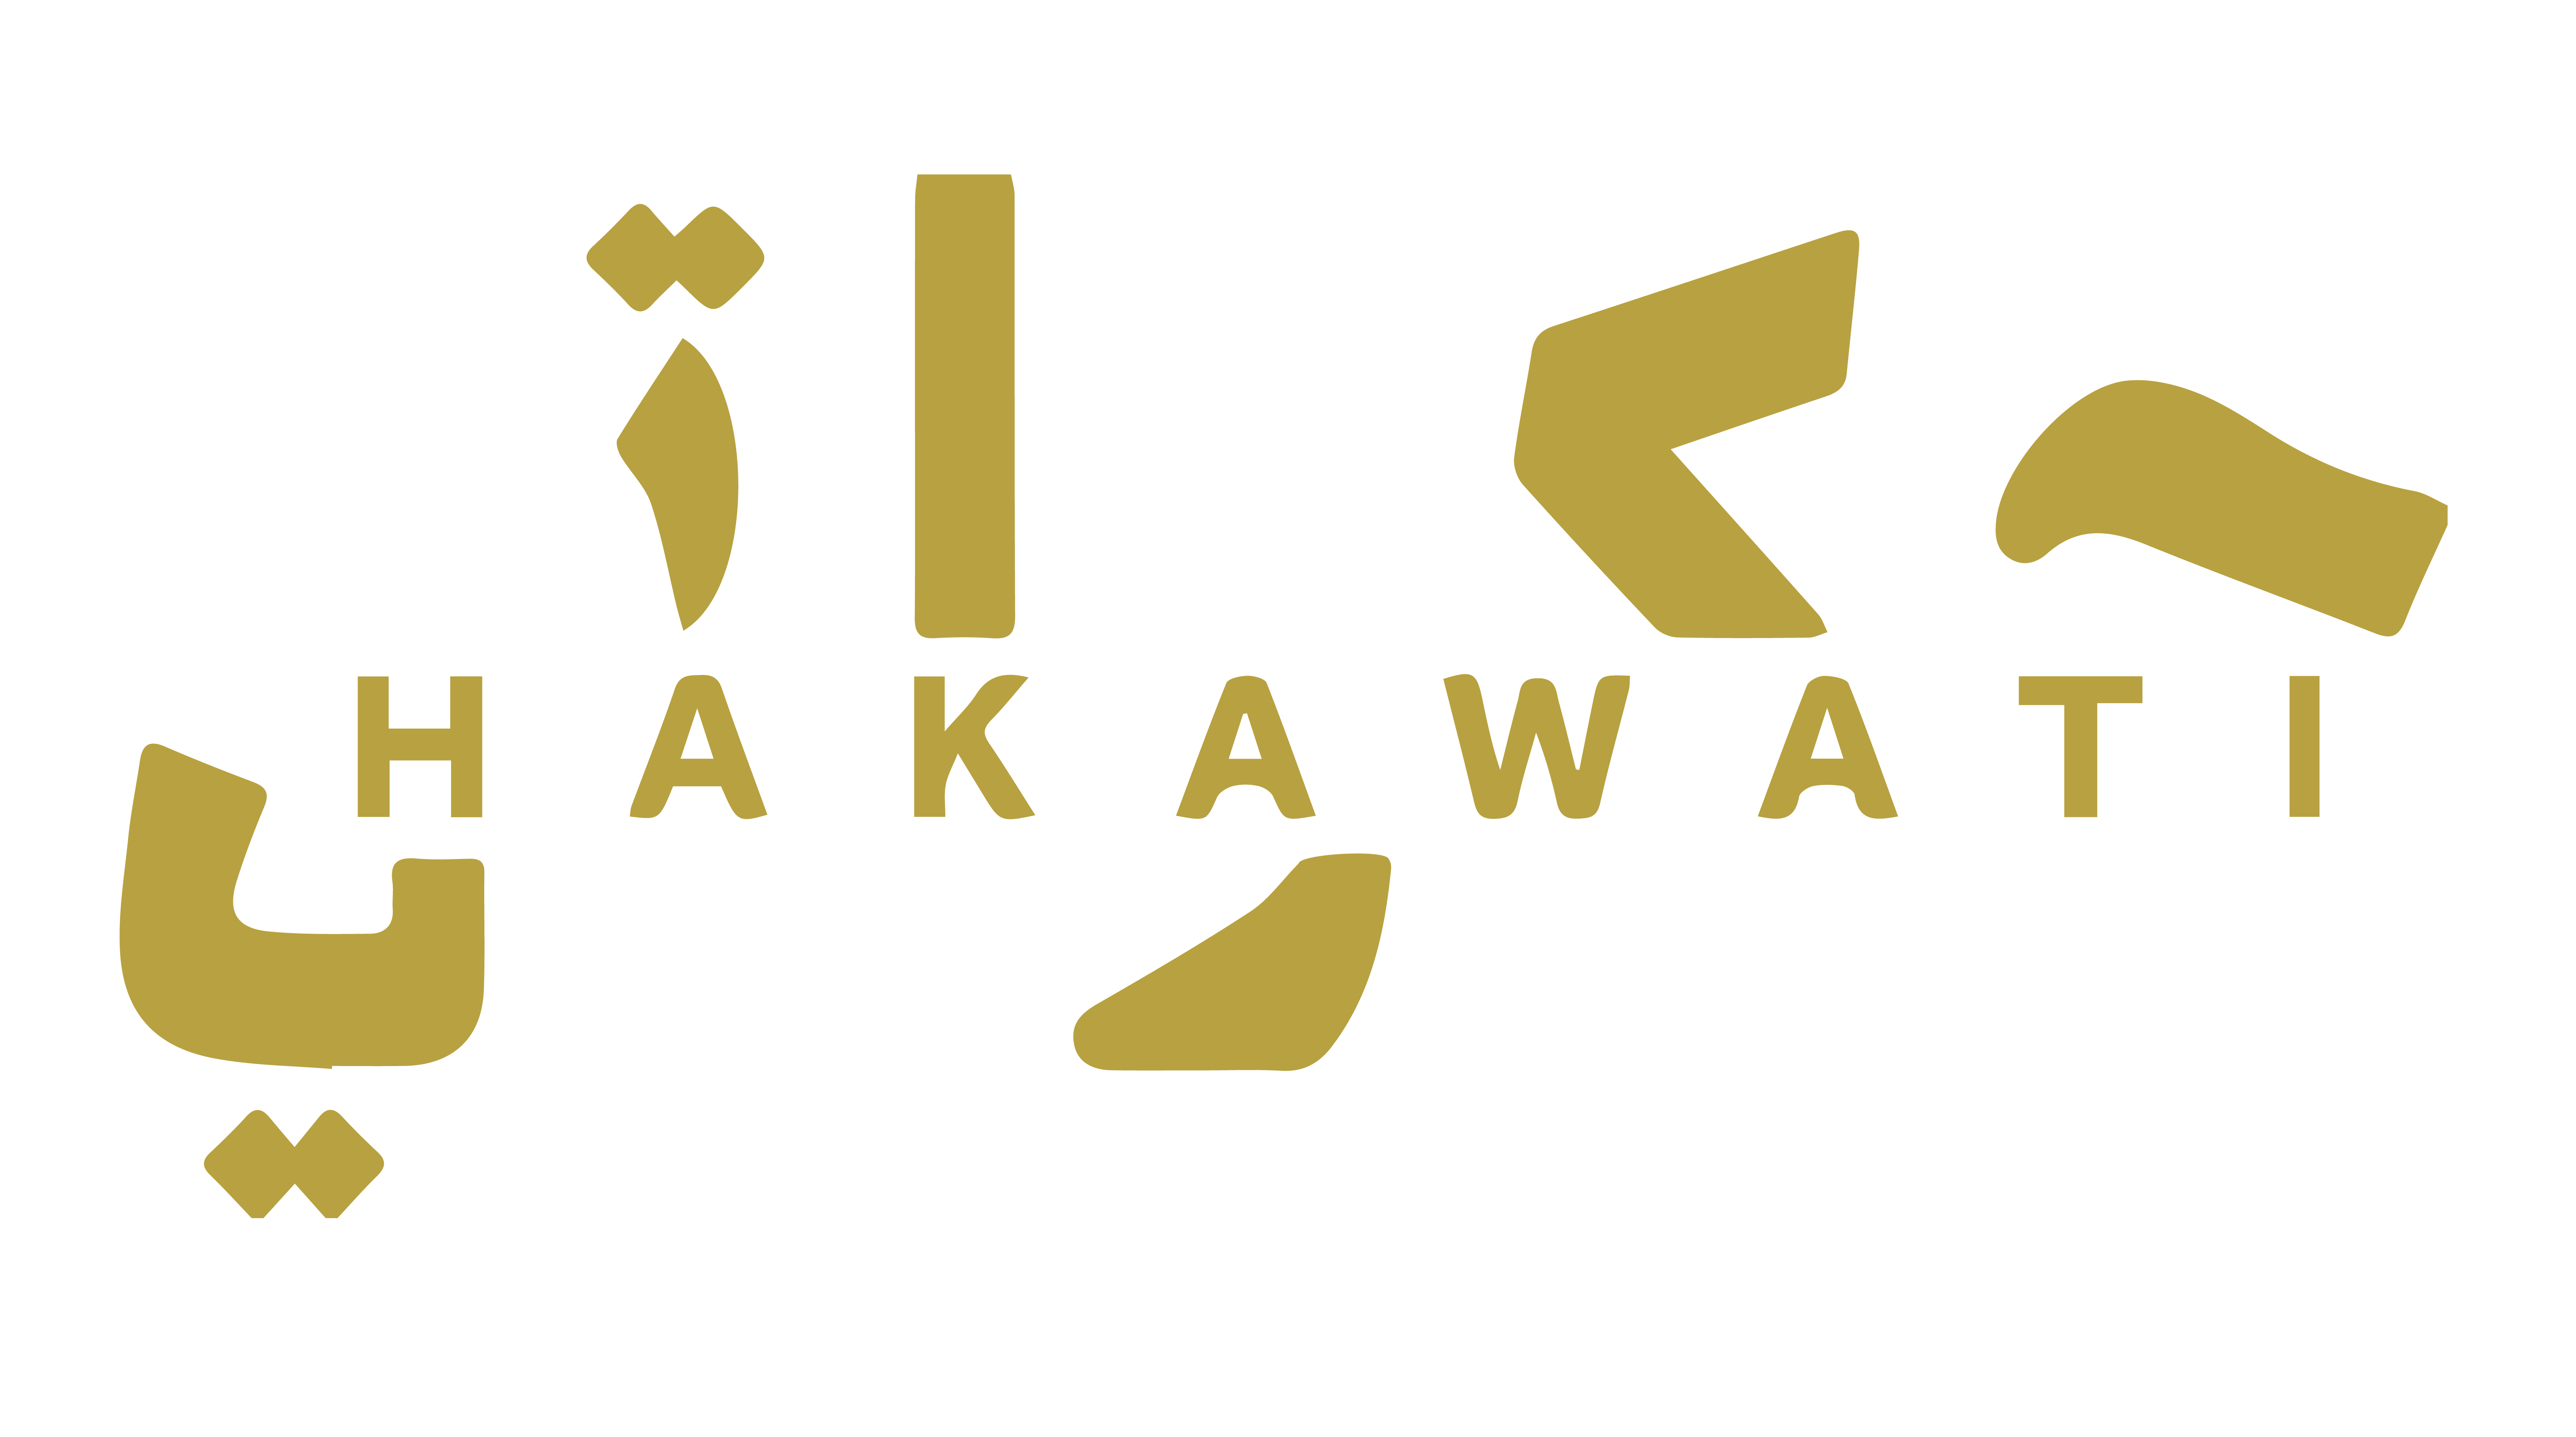 The Hakawati Project